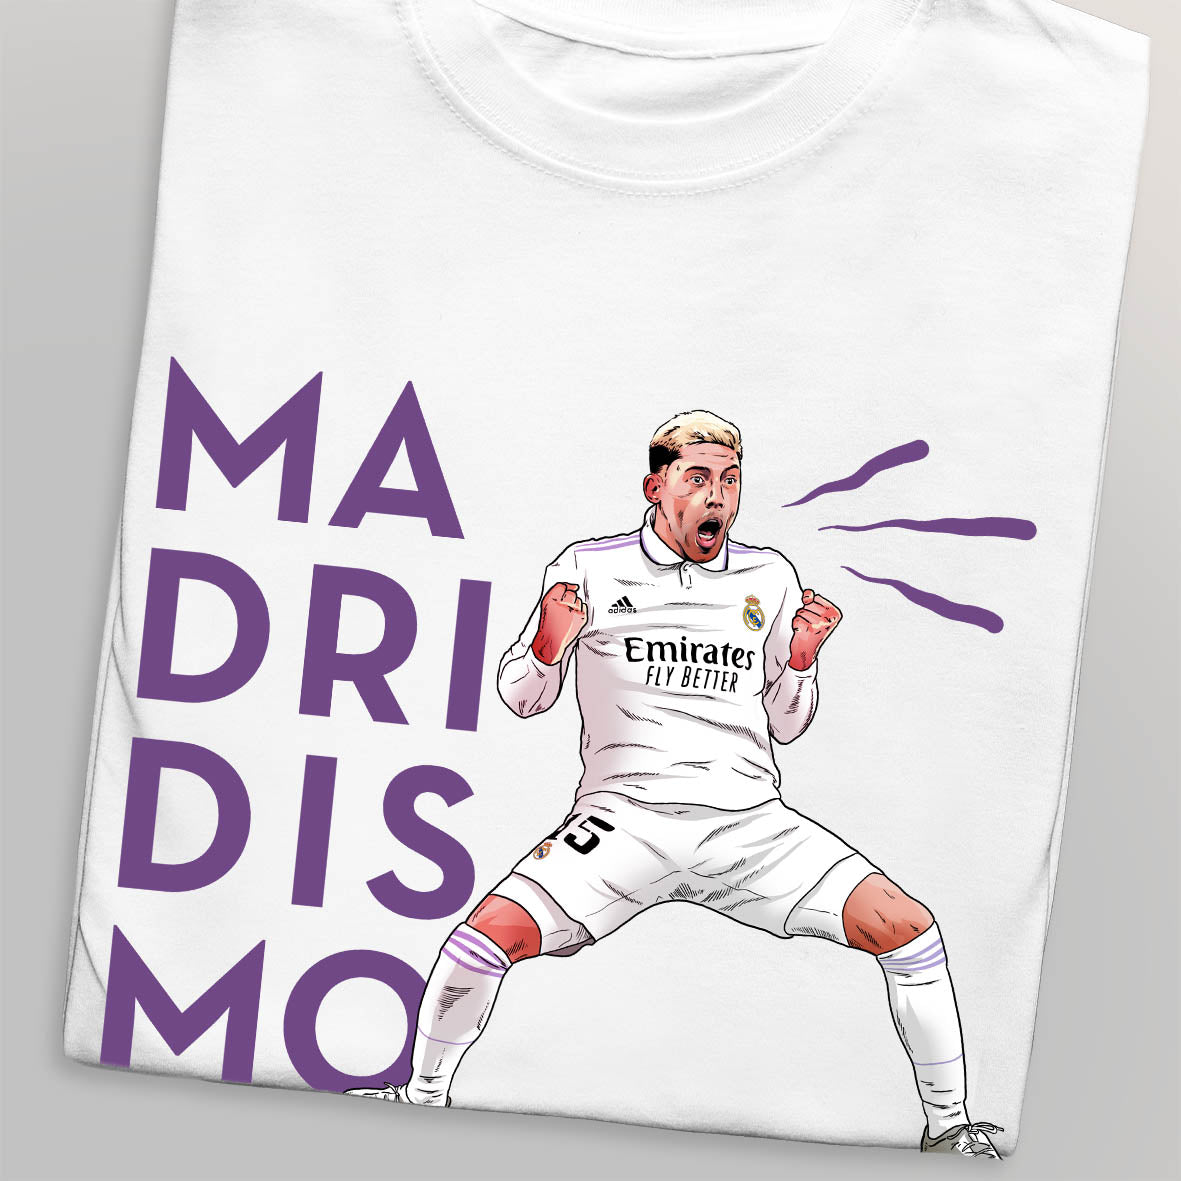 Madridismo - Camiseta